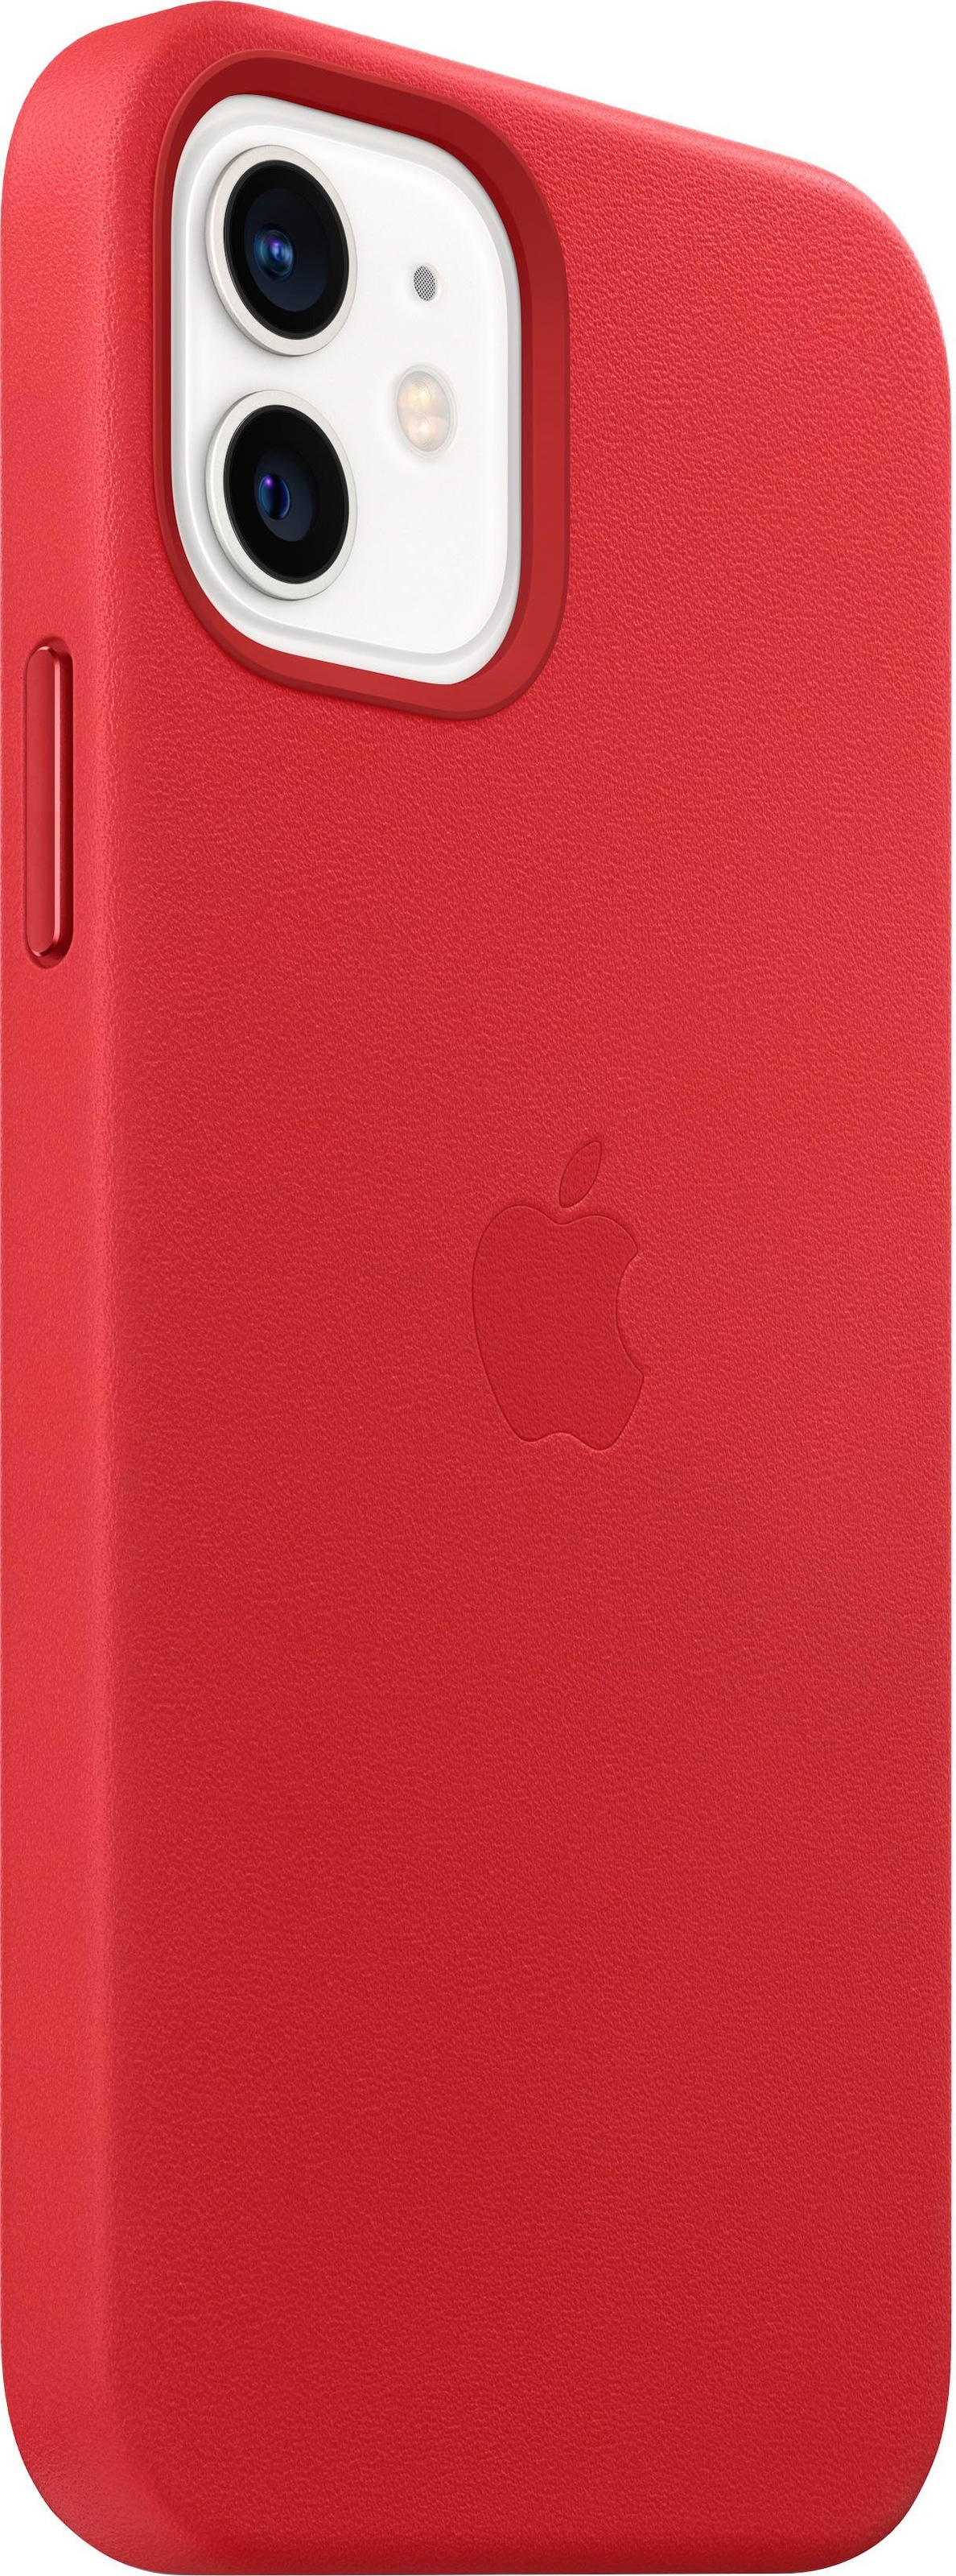 Smartphone-Hülle »iPhone 12/12 Pro Leather Case«